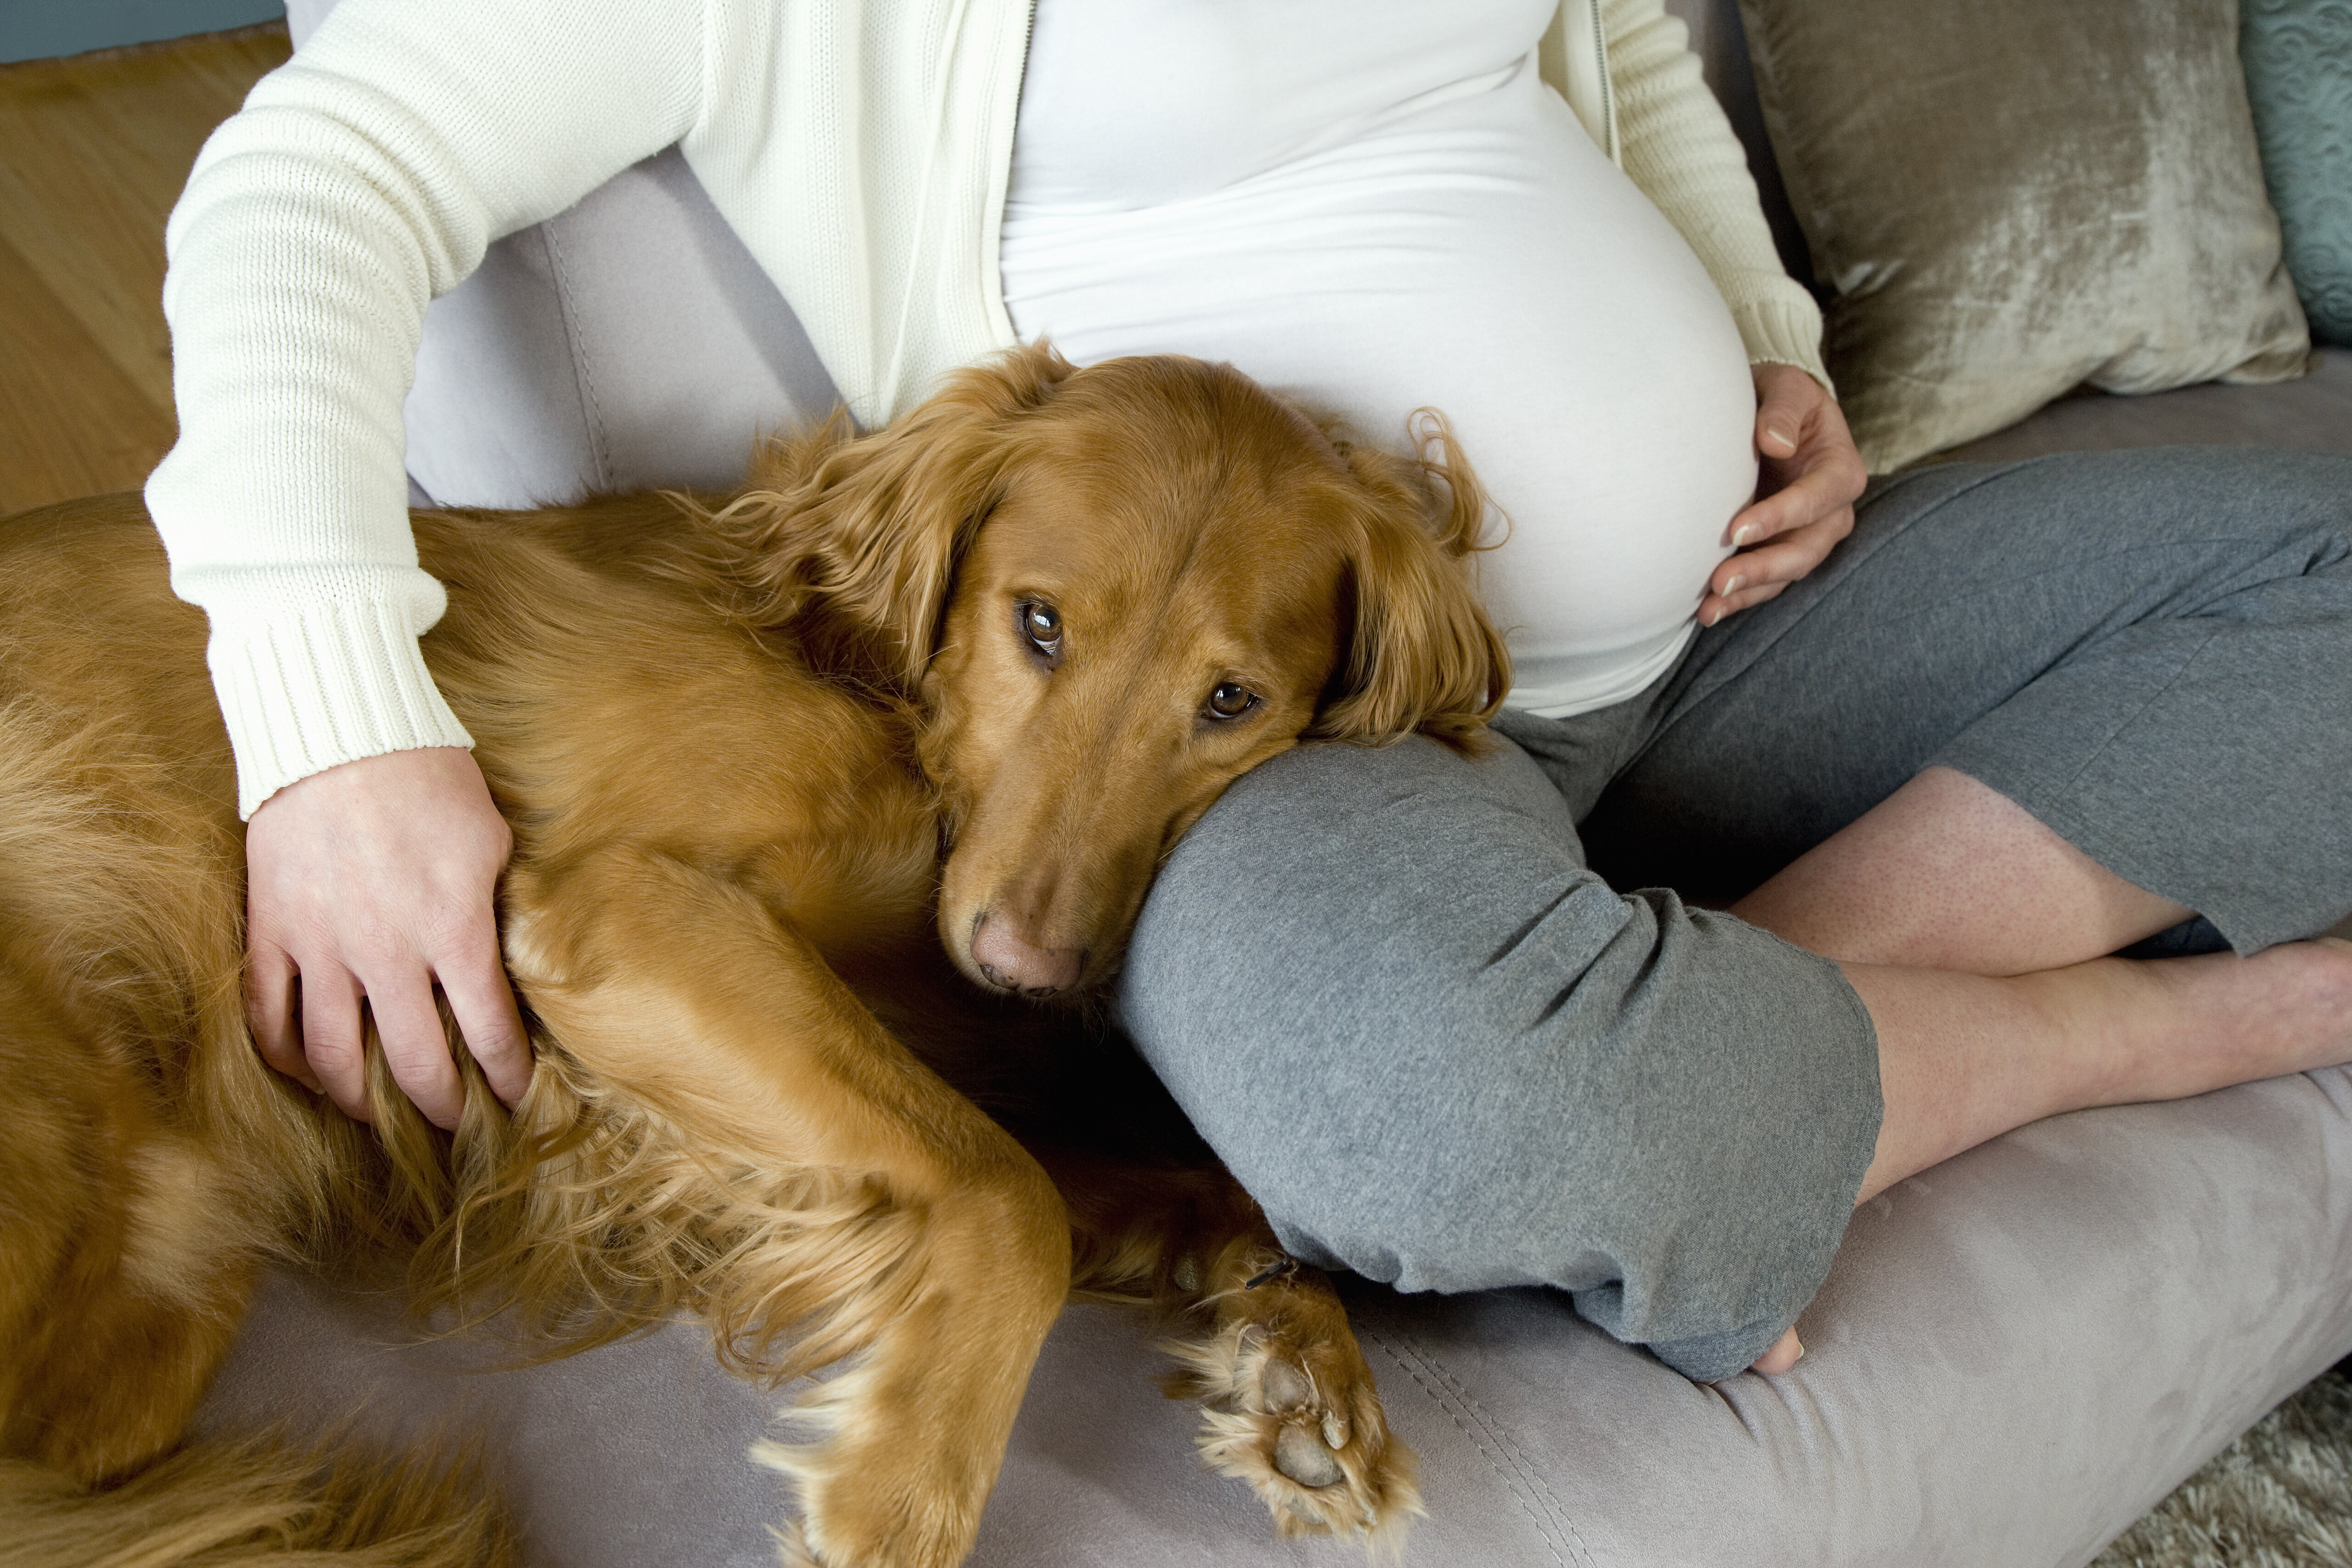 can a dog make a human pregnant